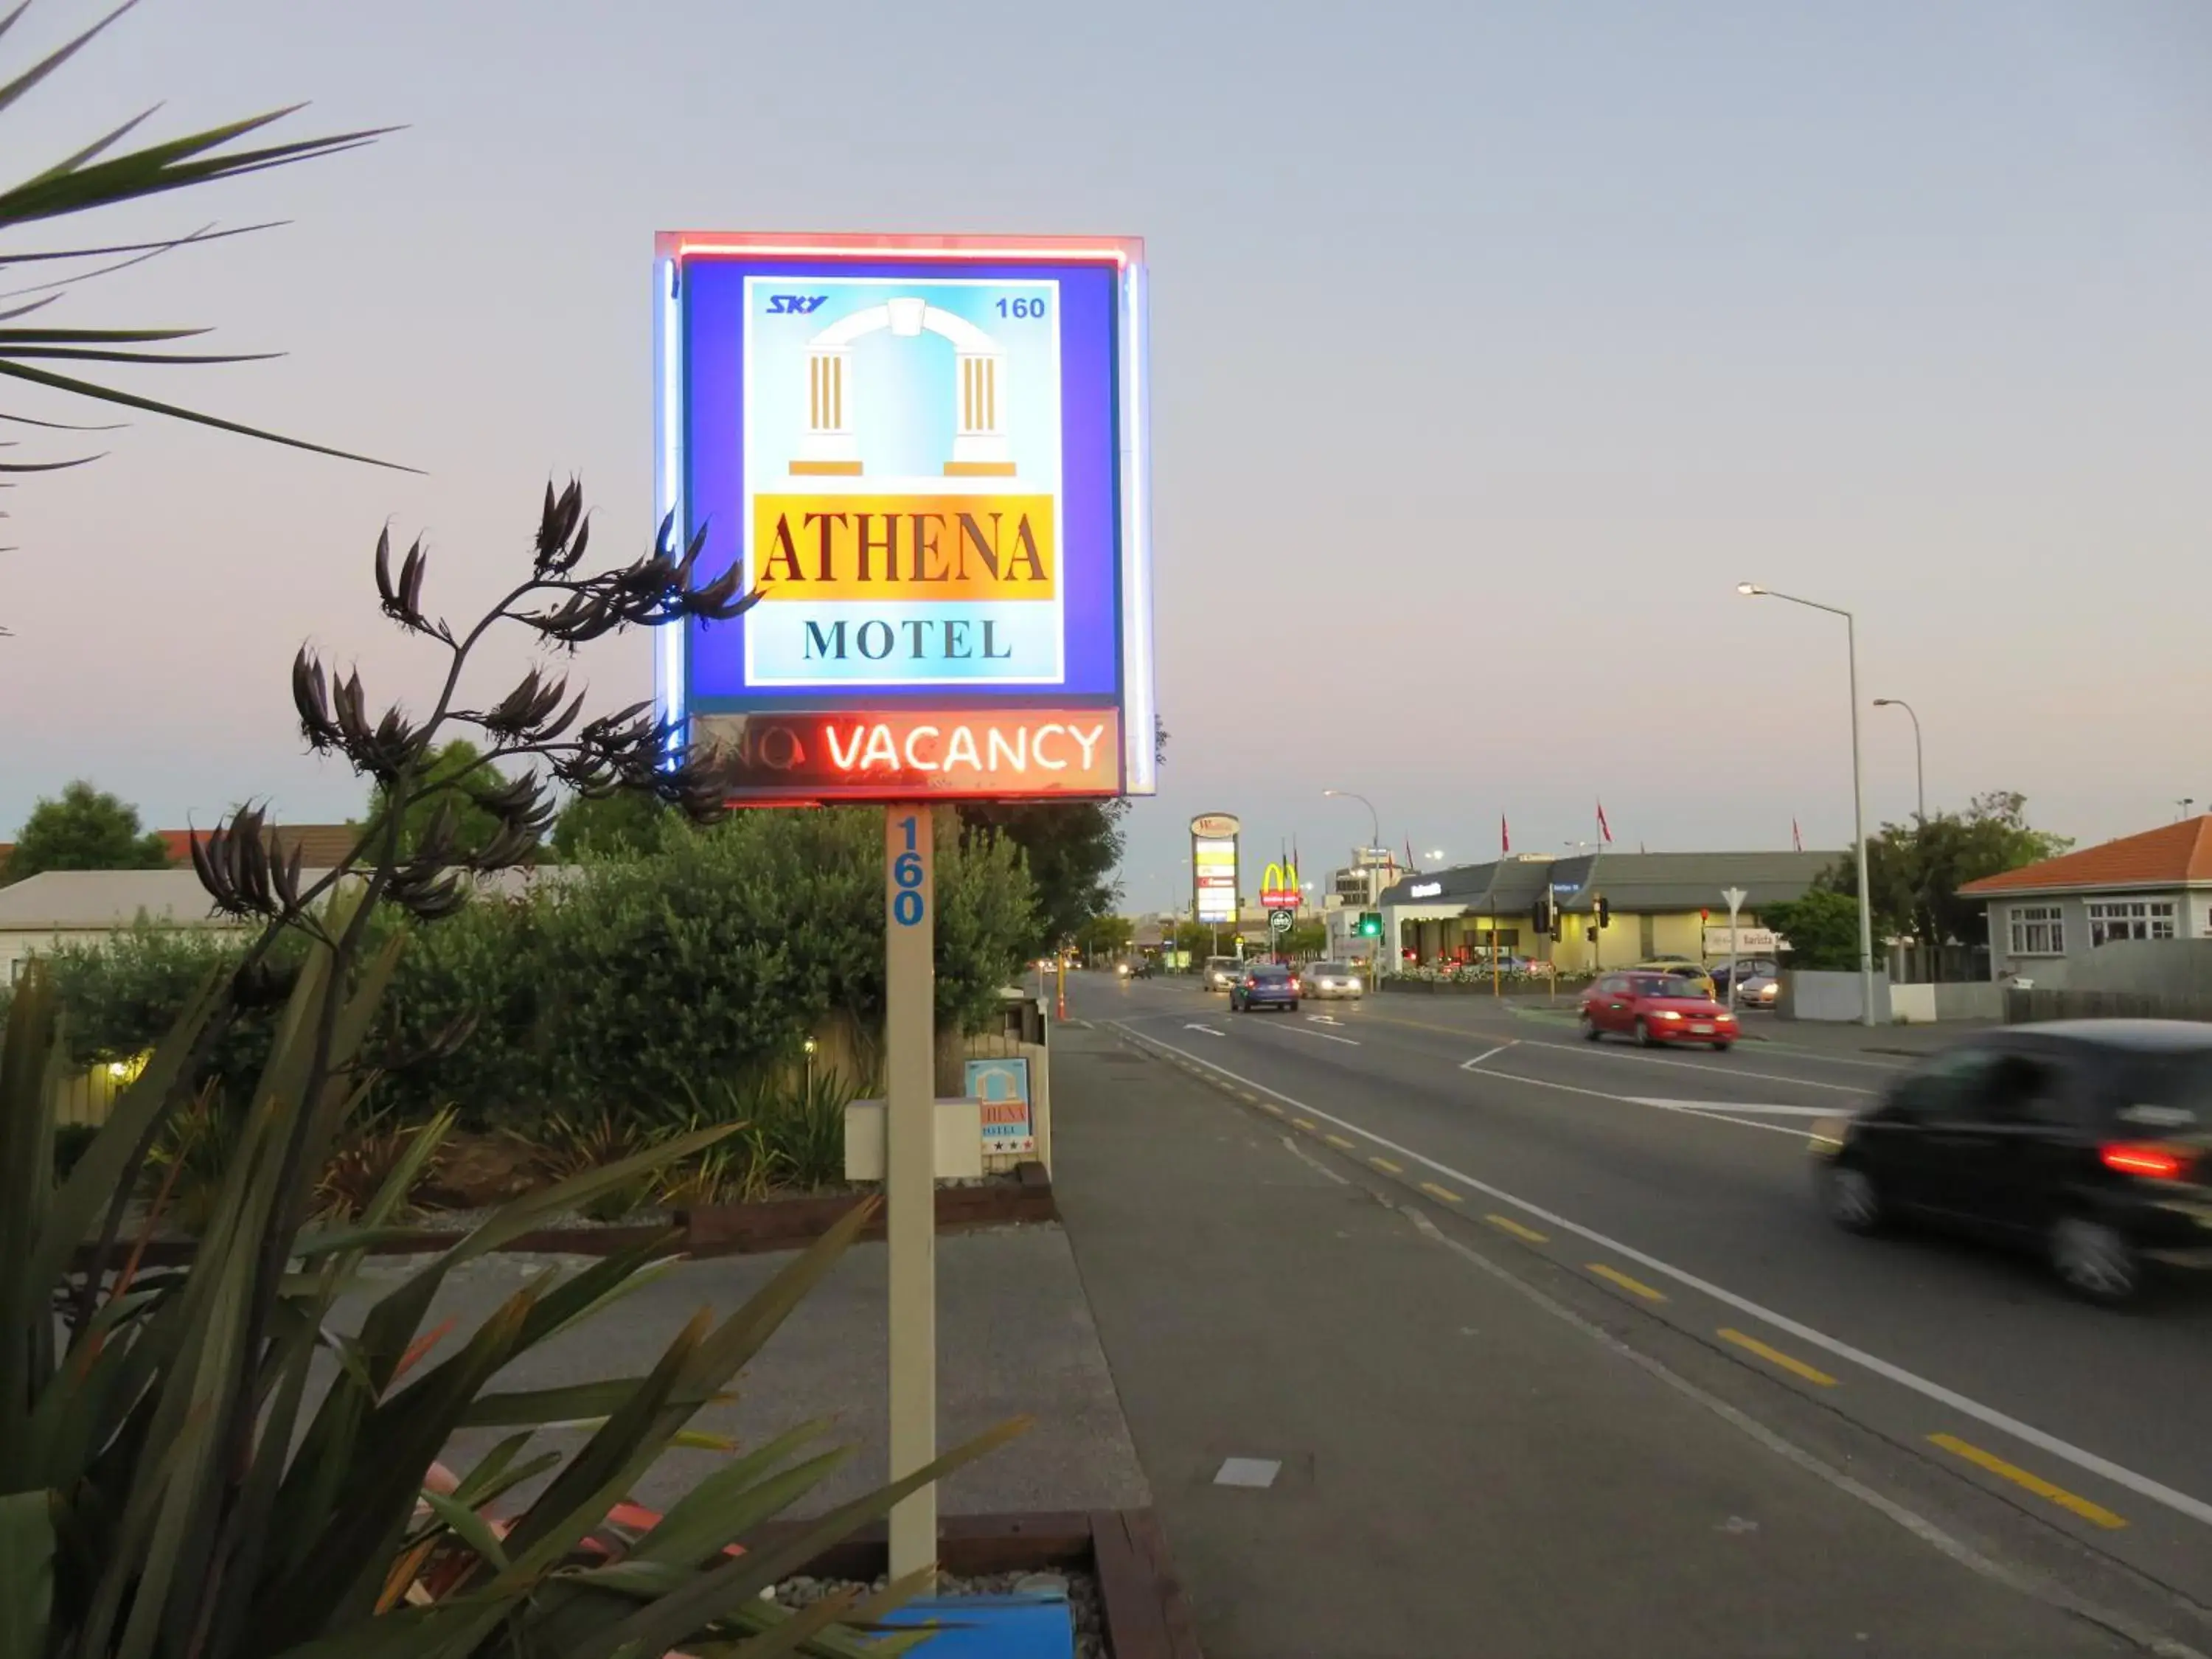 Property logo or sign in Athena Motel